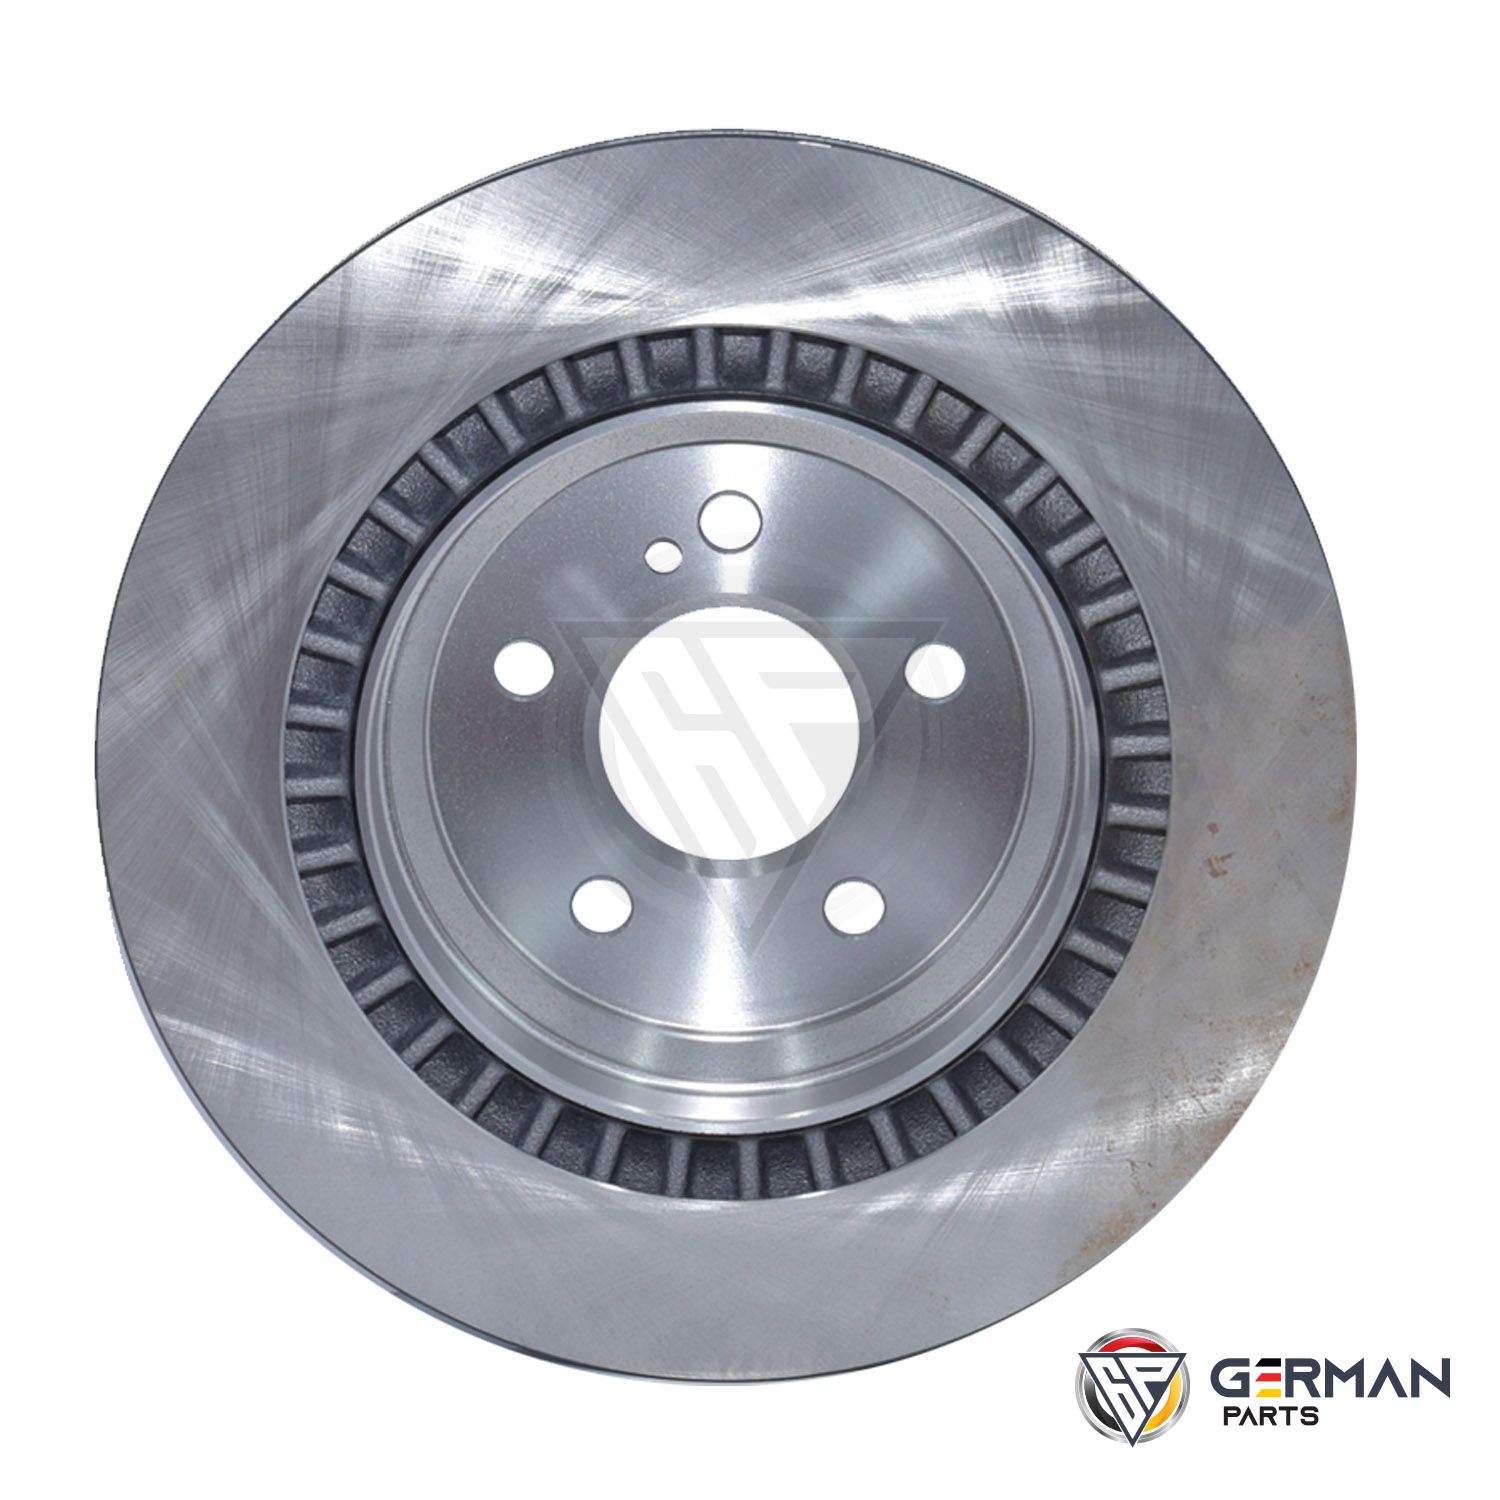 Buy TRW Rear Brake Disc 2214230412 - German Parts